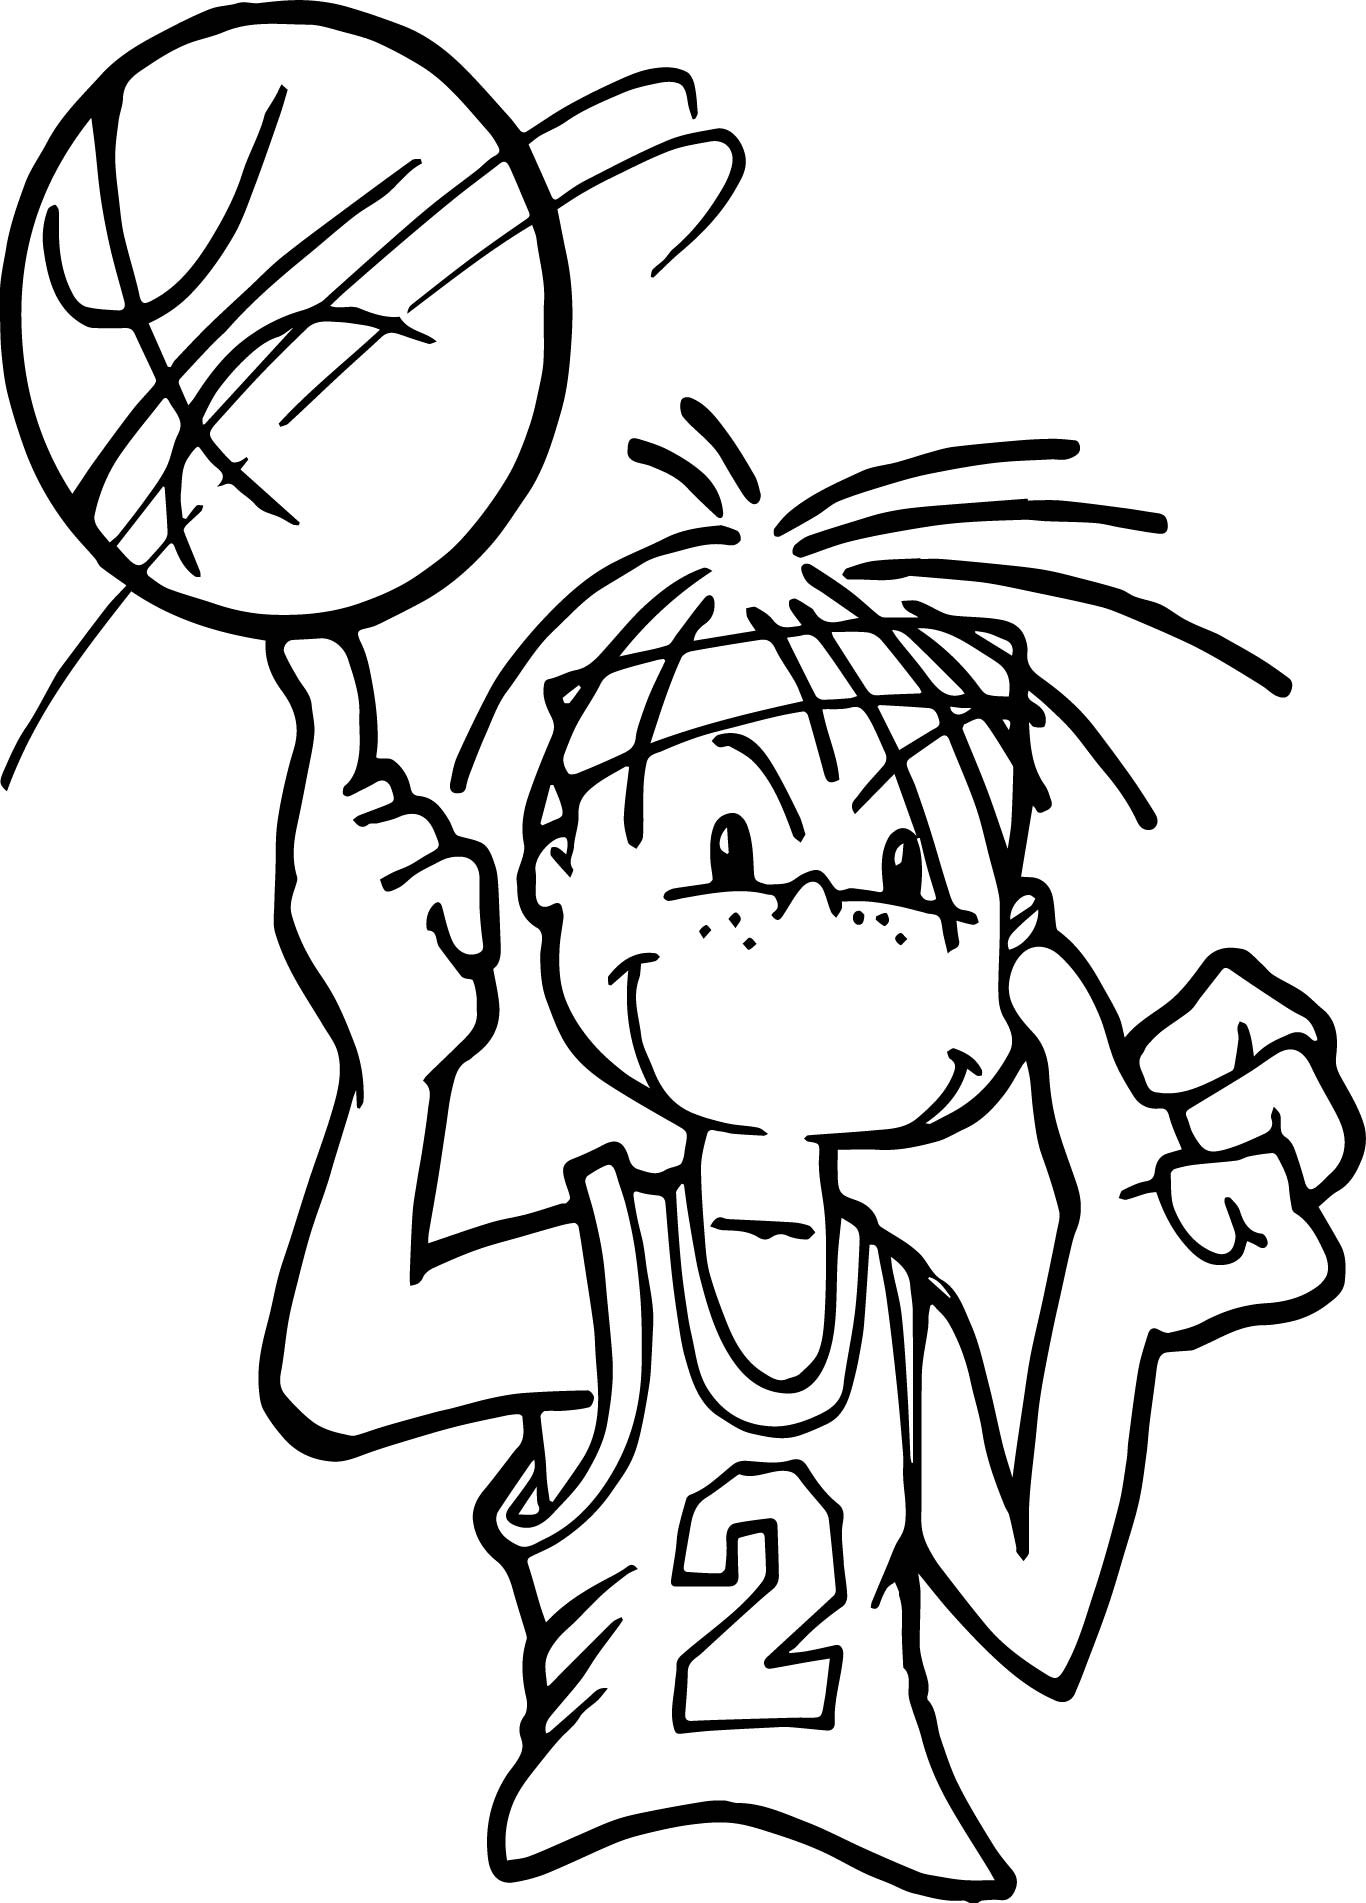 Basketball Coloring Sheets For Boys
 Boy Playing Basketball Coloring Page